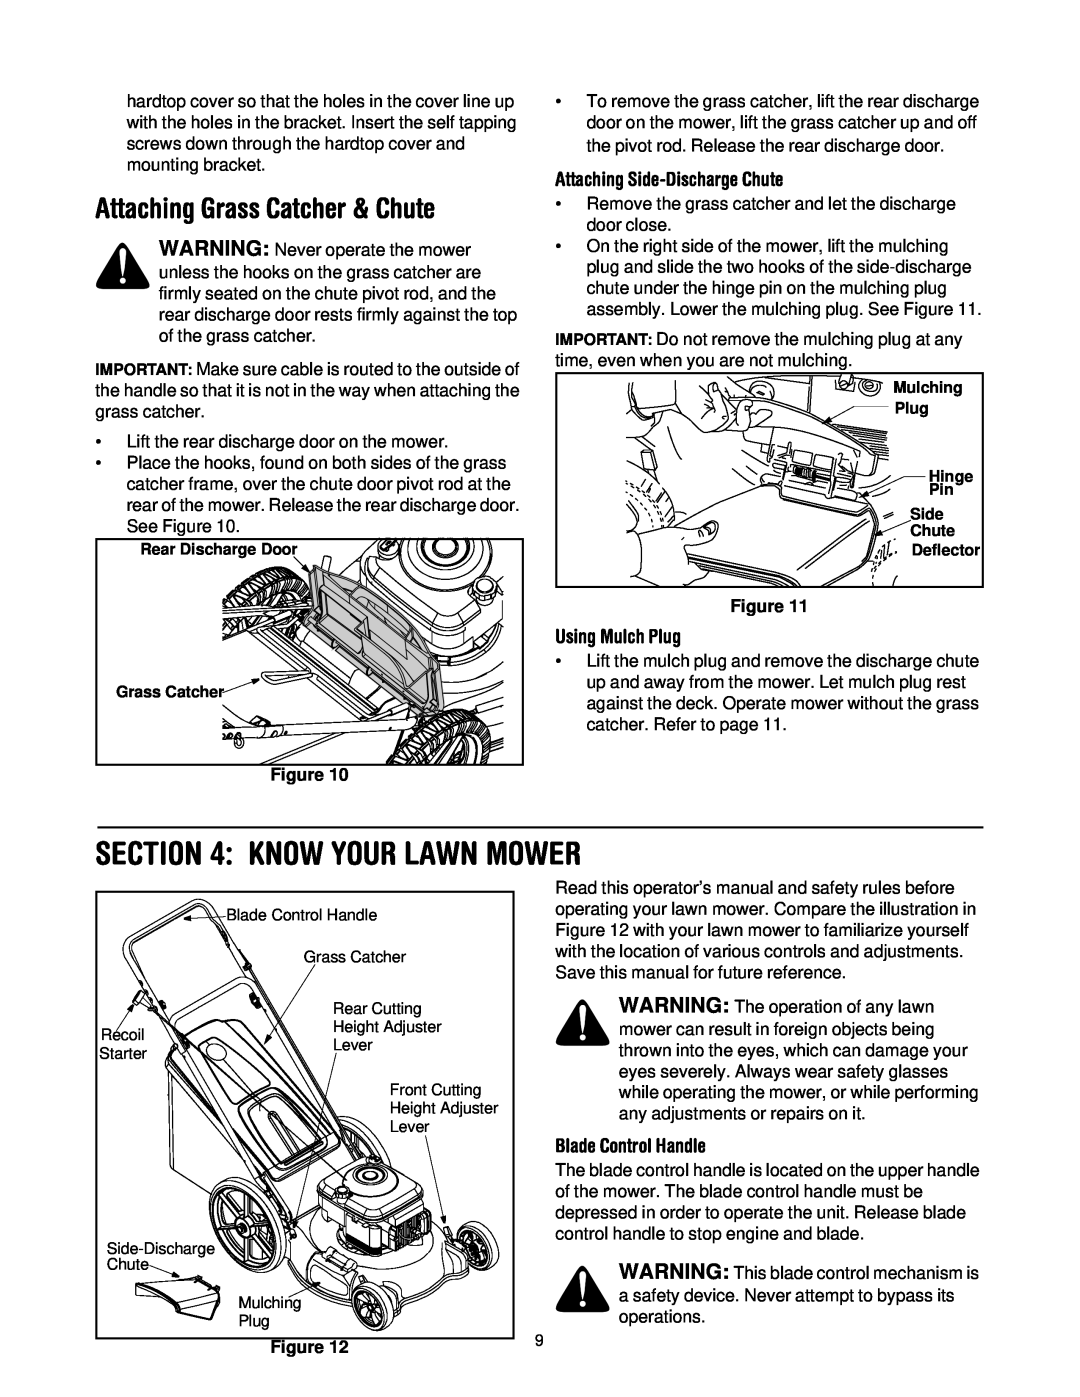 Yard-Man 549 manual Know Your Lawn Mower, Attaching Grass Catcher & Chute, Attaching Side-DischargeChute, Using Mulch Plug 